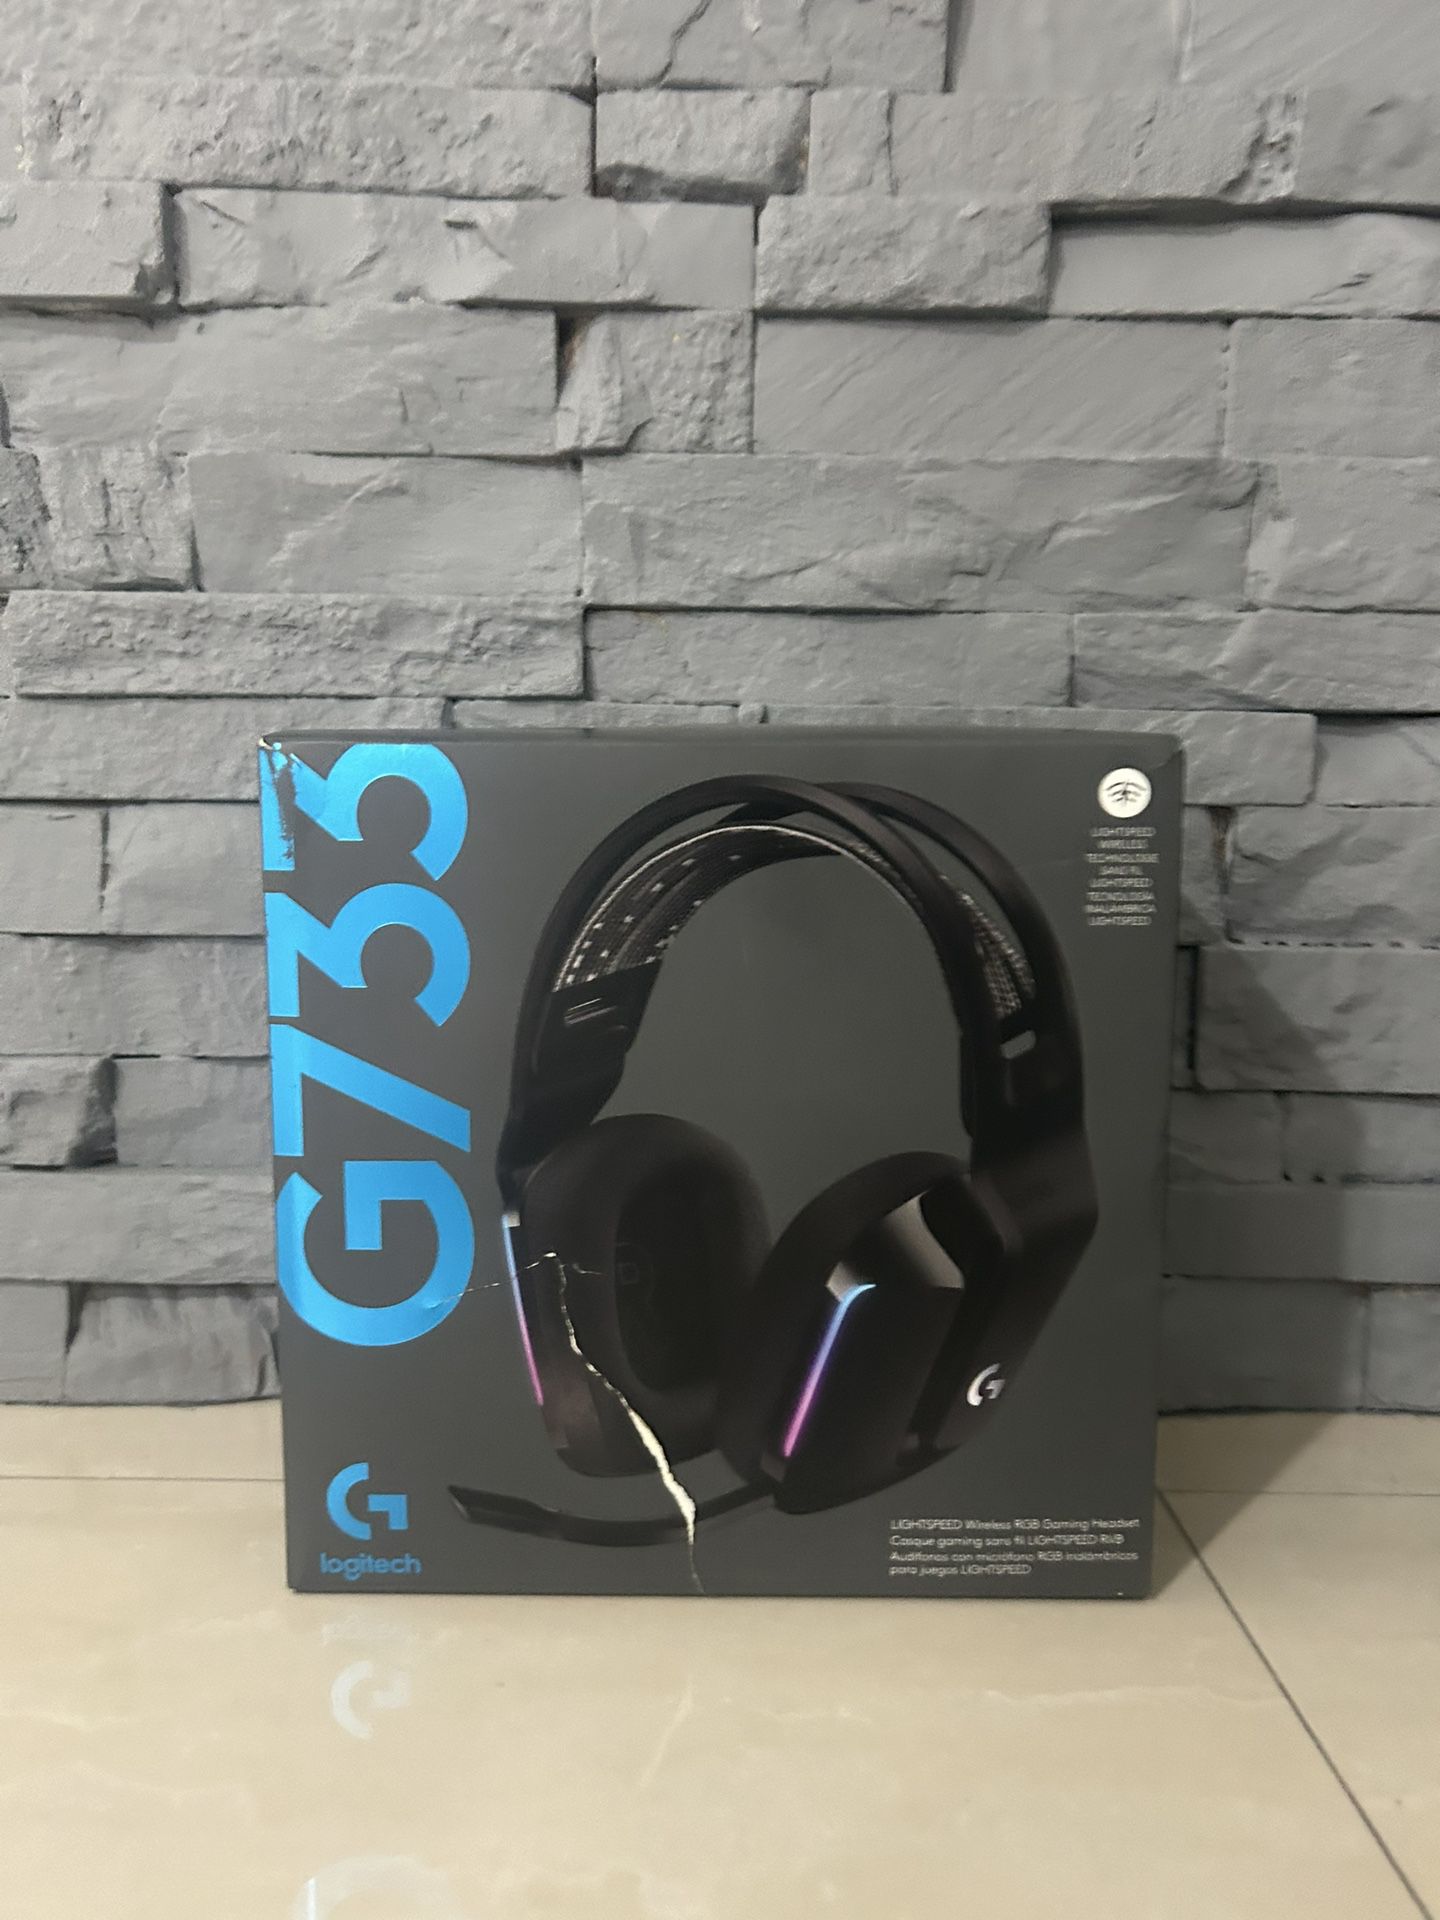 G733 Logitech Gaming Headphones